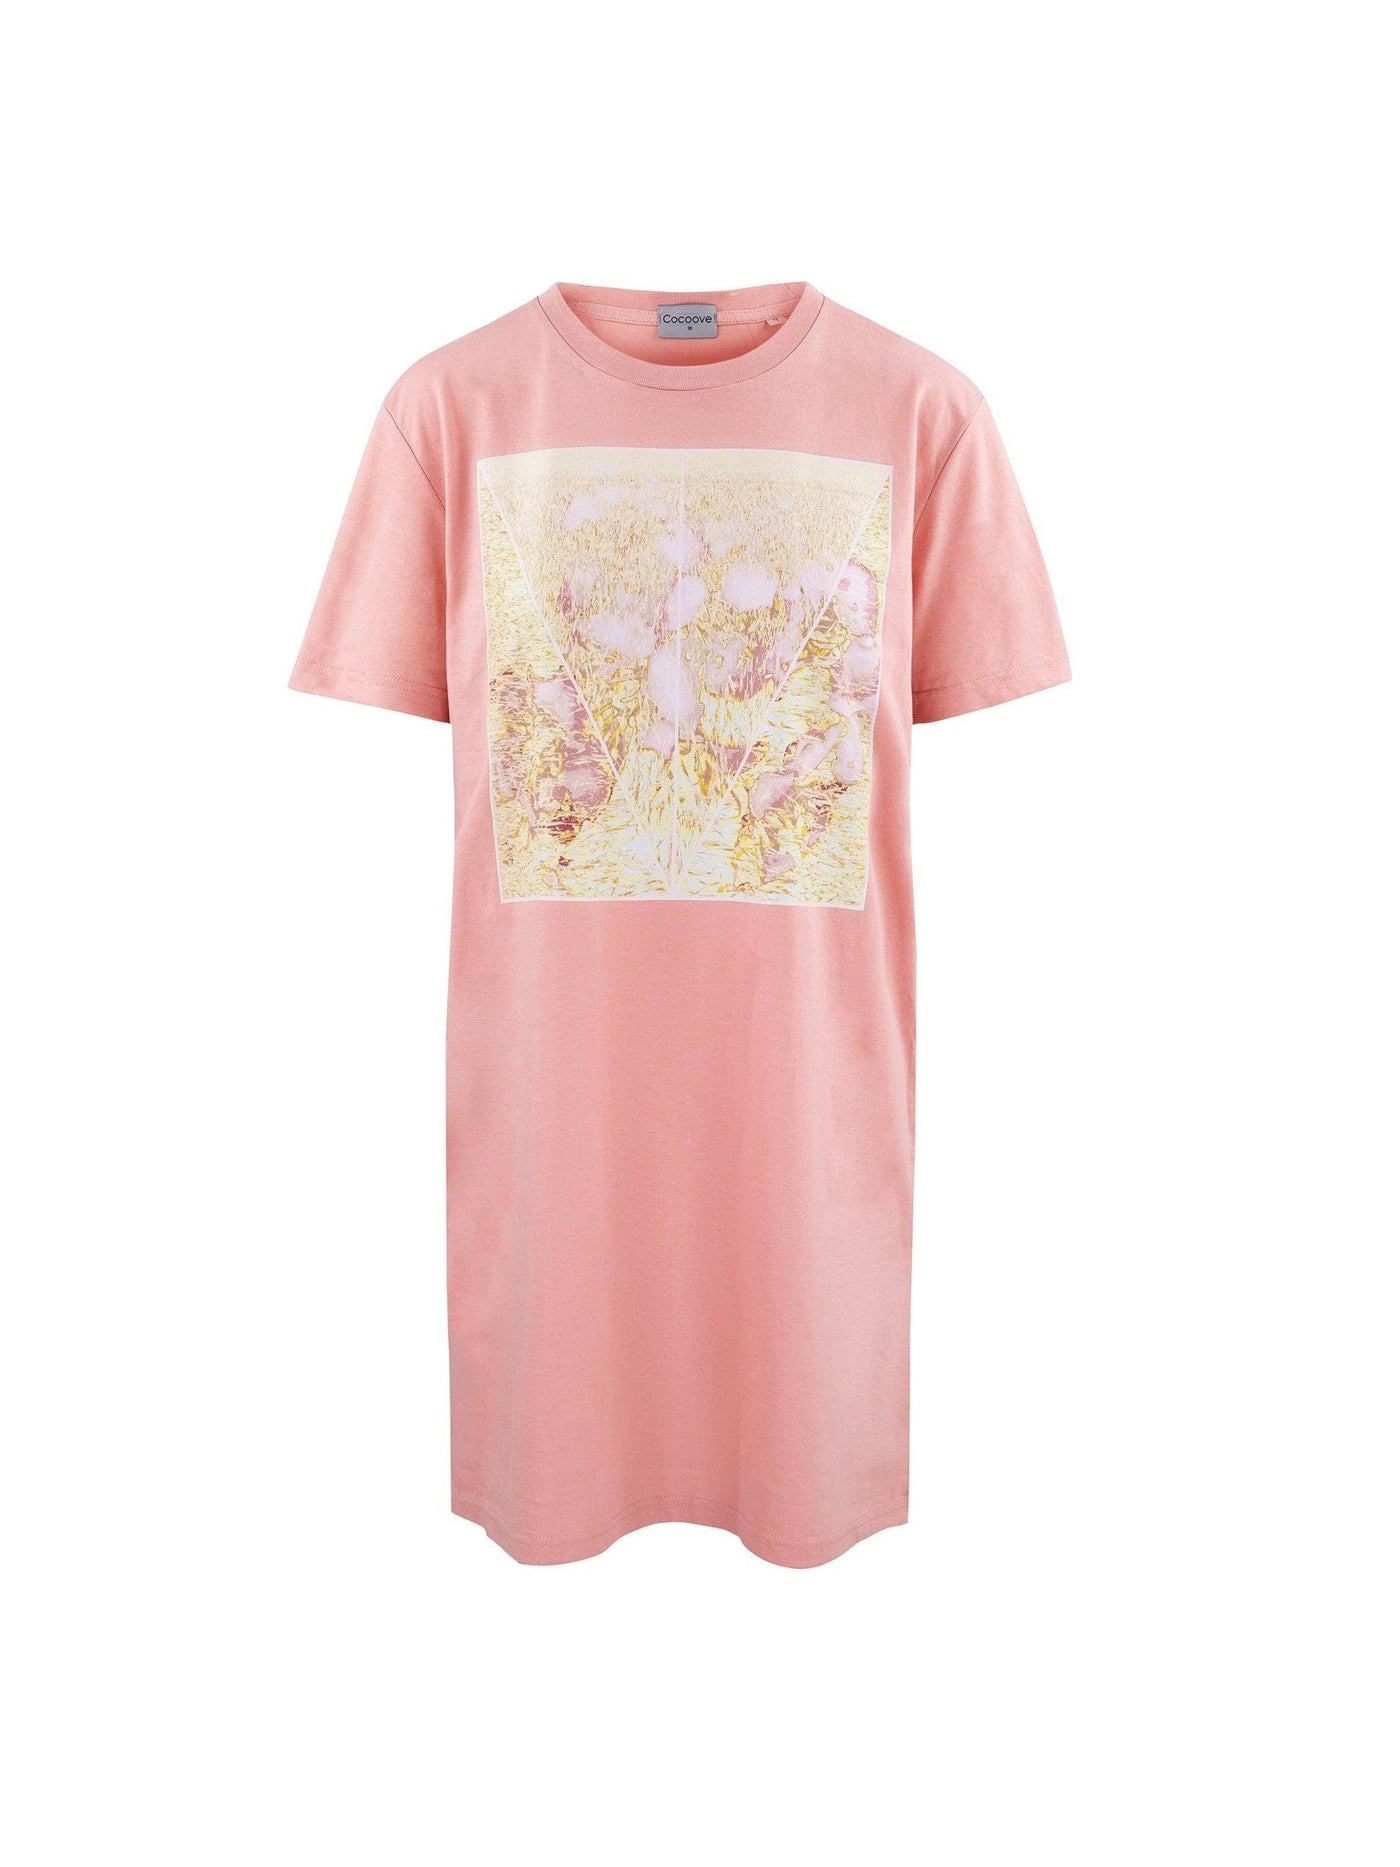 Pink print t-shirt dress